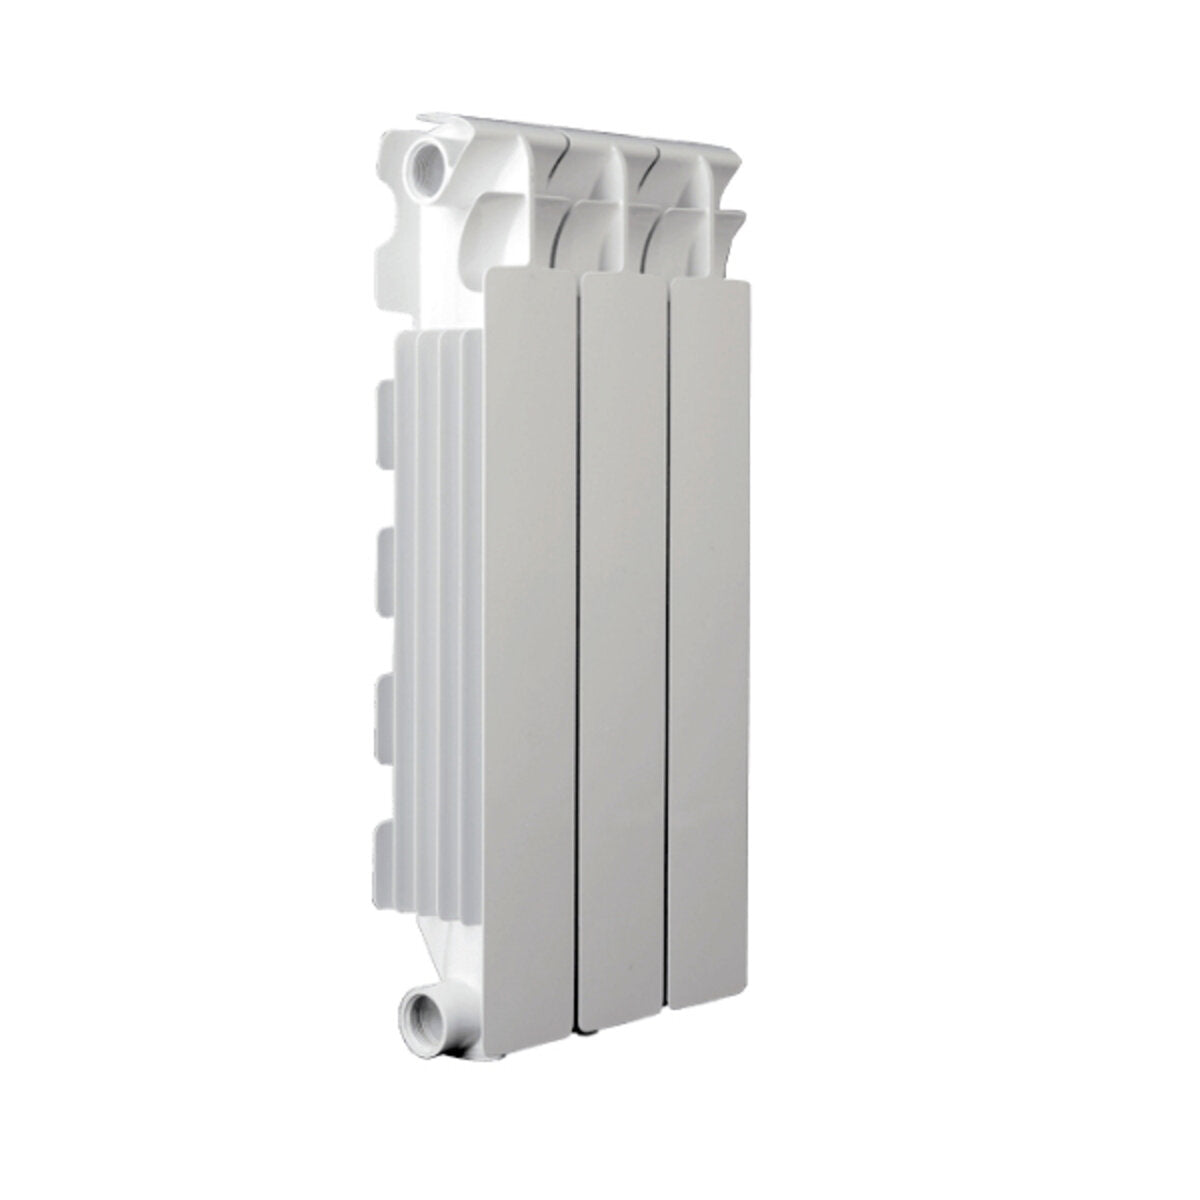 Fondital in die-cast aluminum calidor super b4 3 elements center distance 500 mm